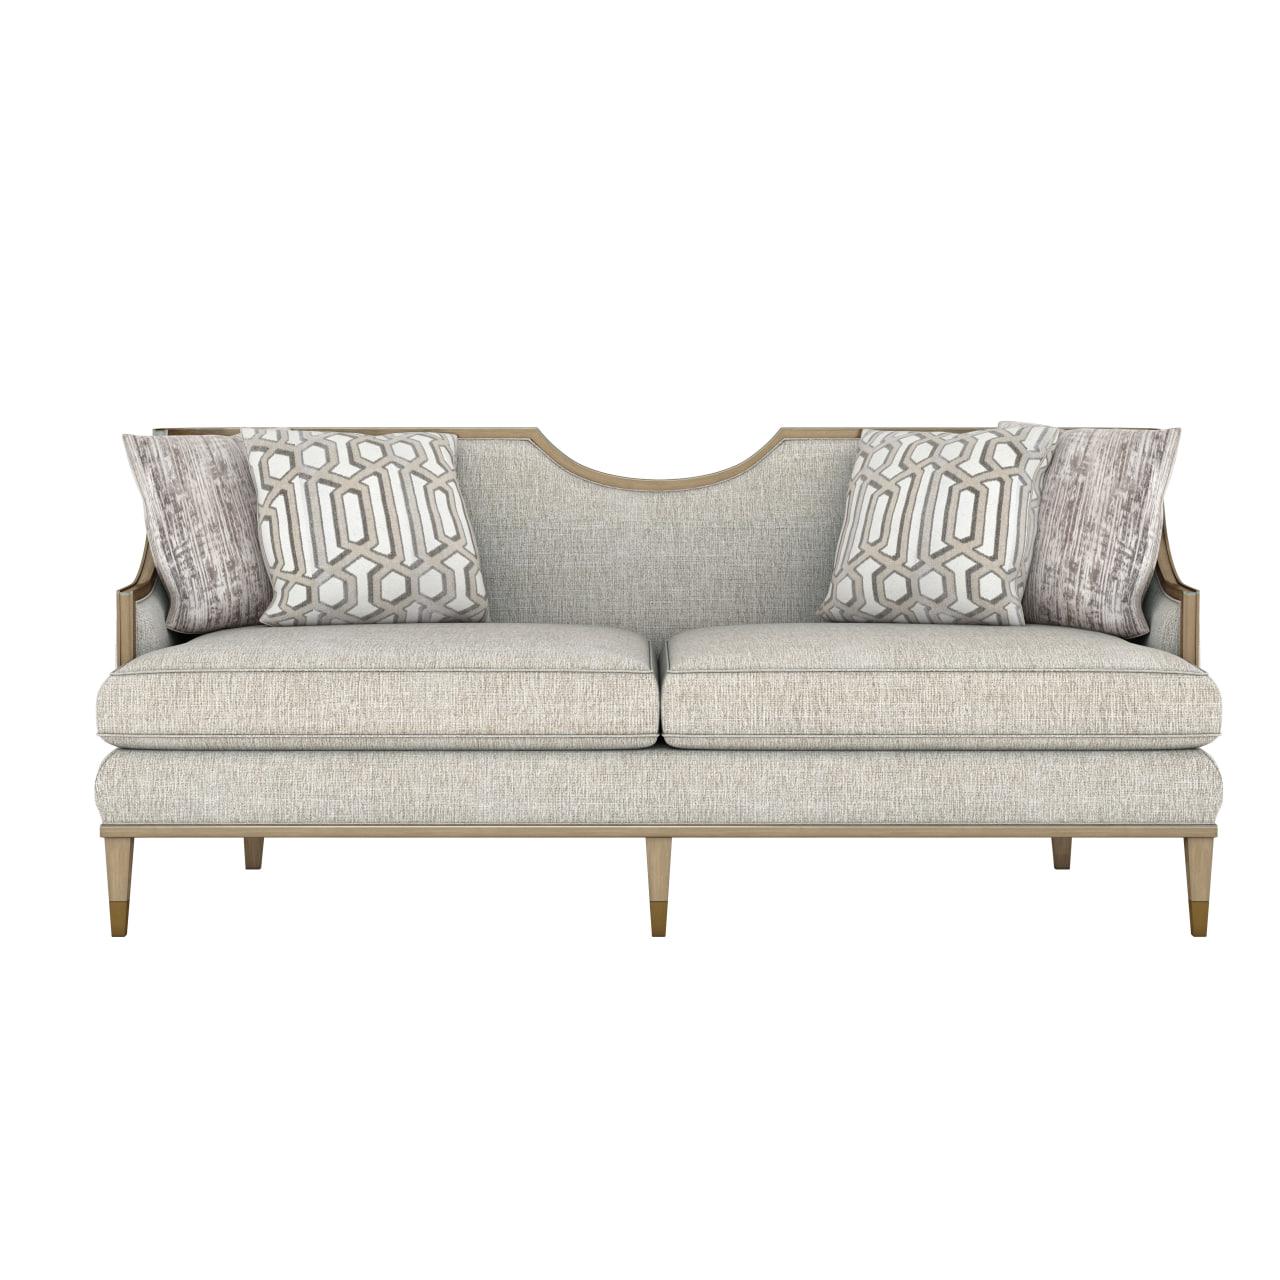 Casual, Transitional Sofa Intrigue Harper 161501-7006AA in Quartz Fabric